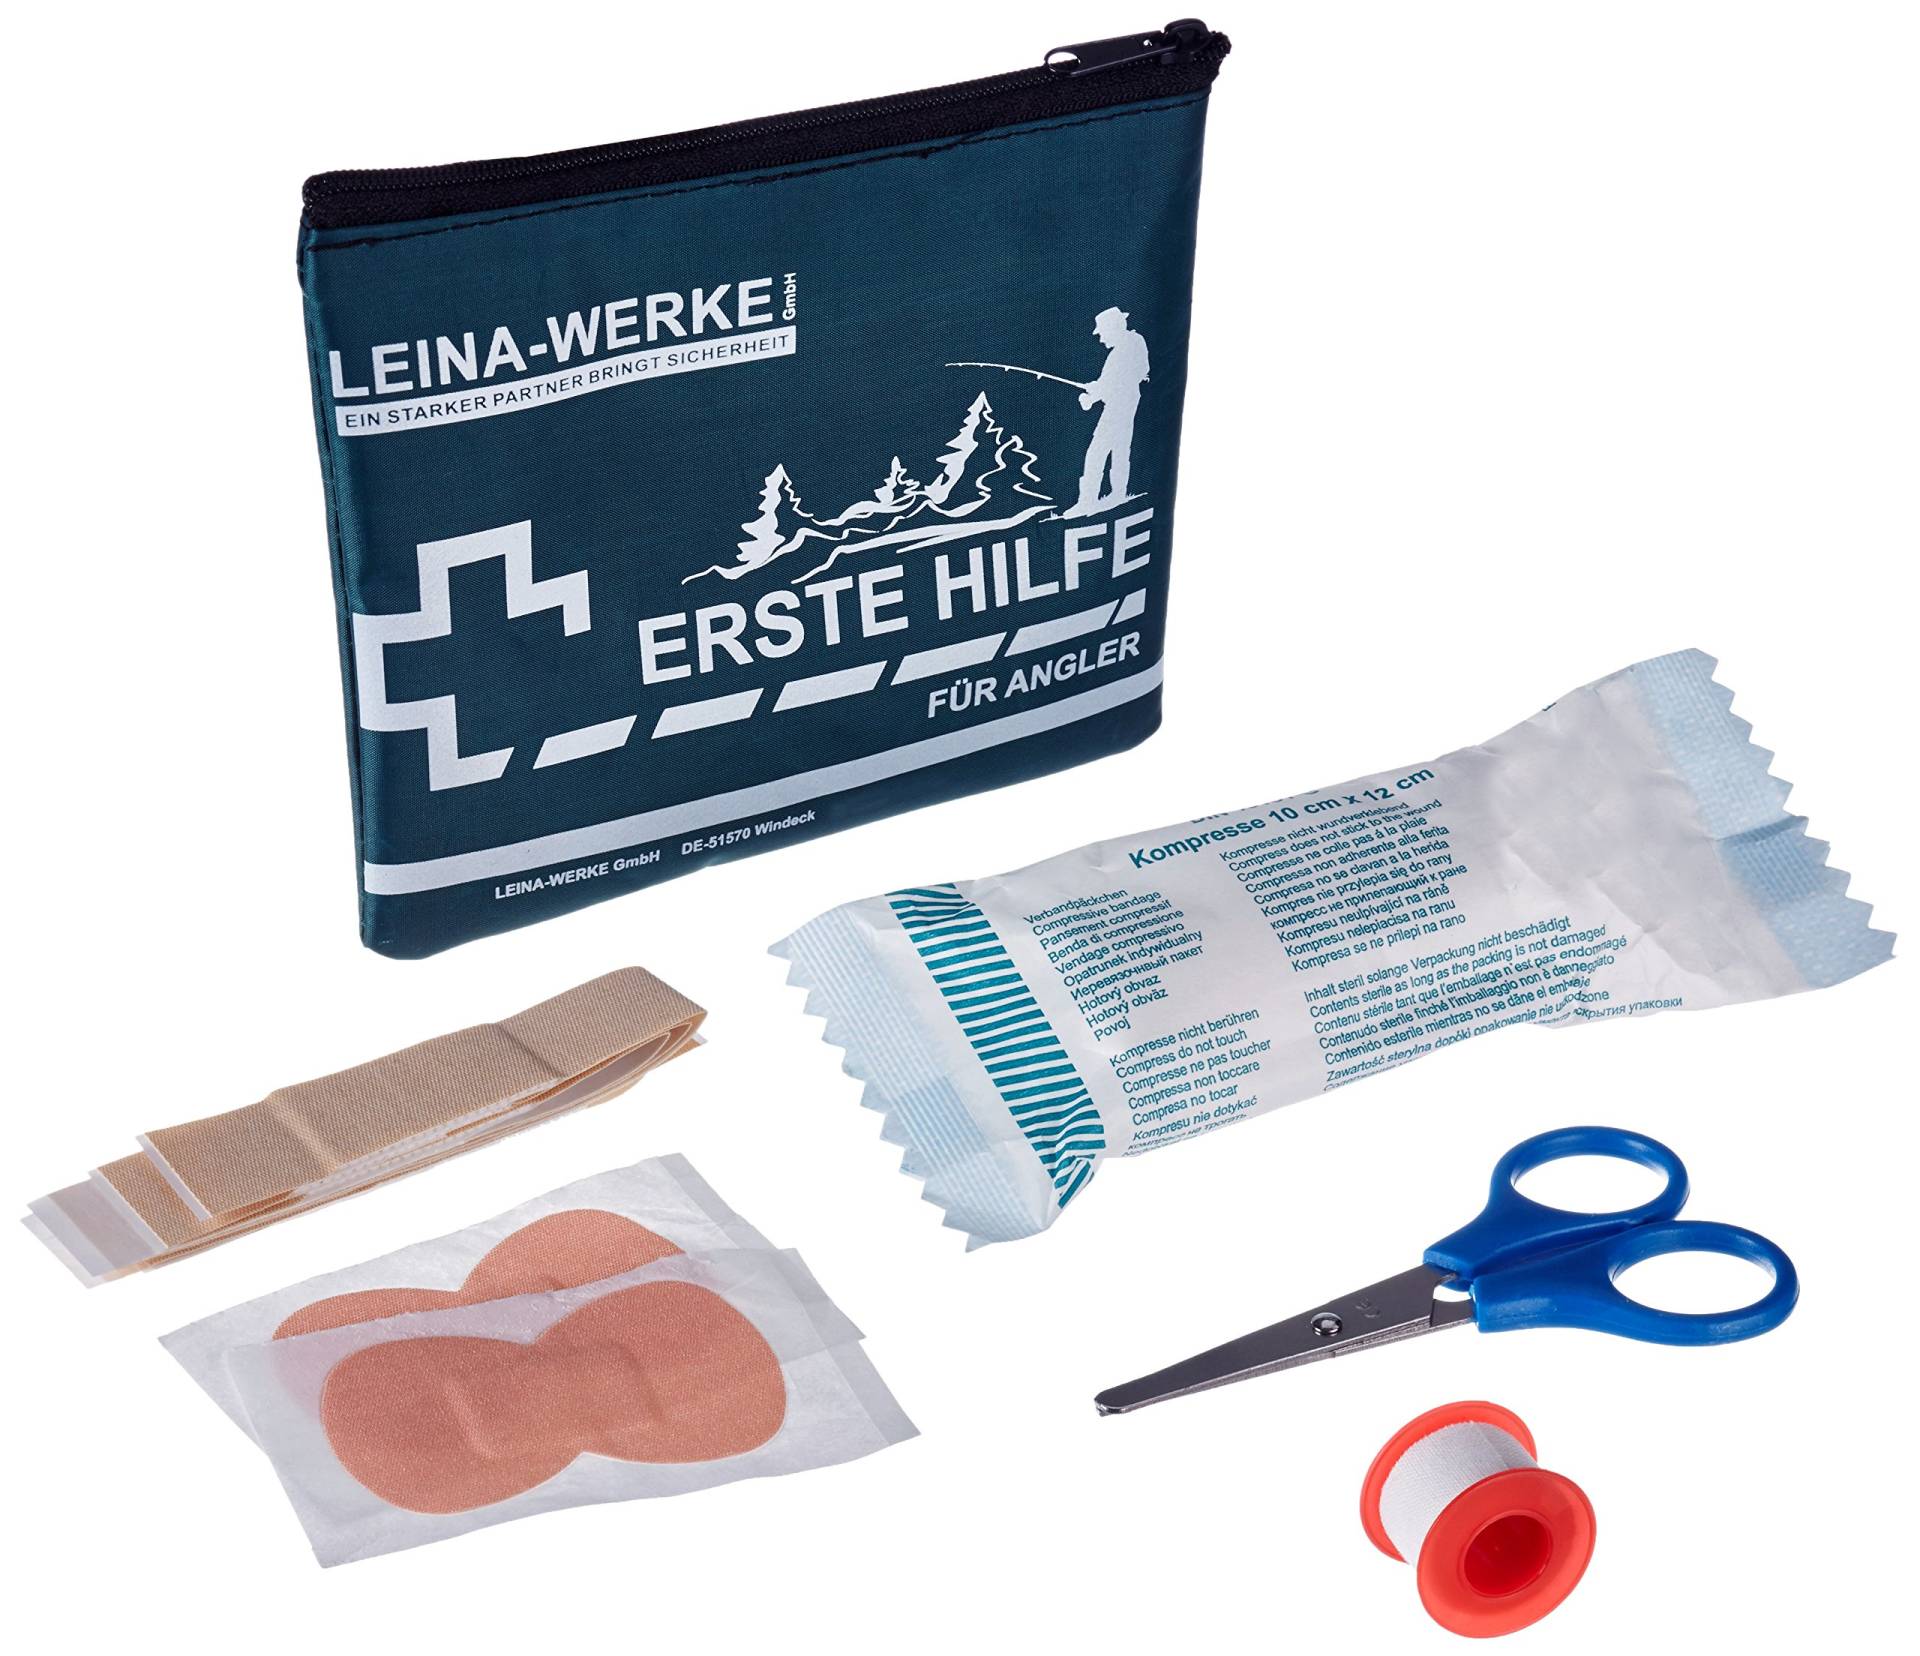 LEINAWERKE 51002 First aid kit for anglers white-green 1 pc. von LEINA-WERKE